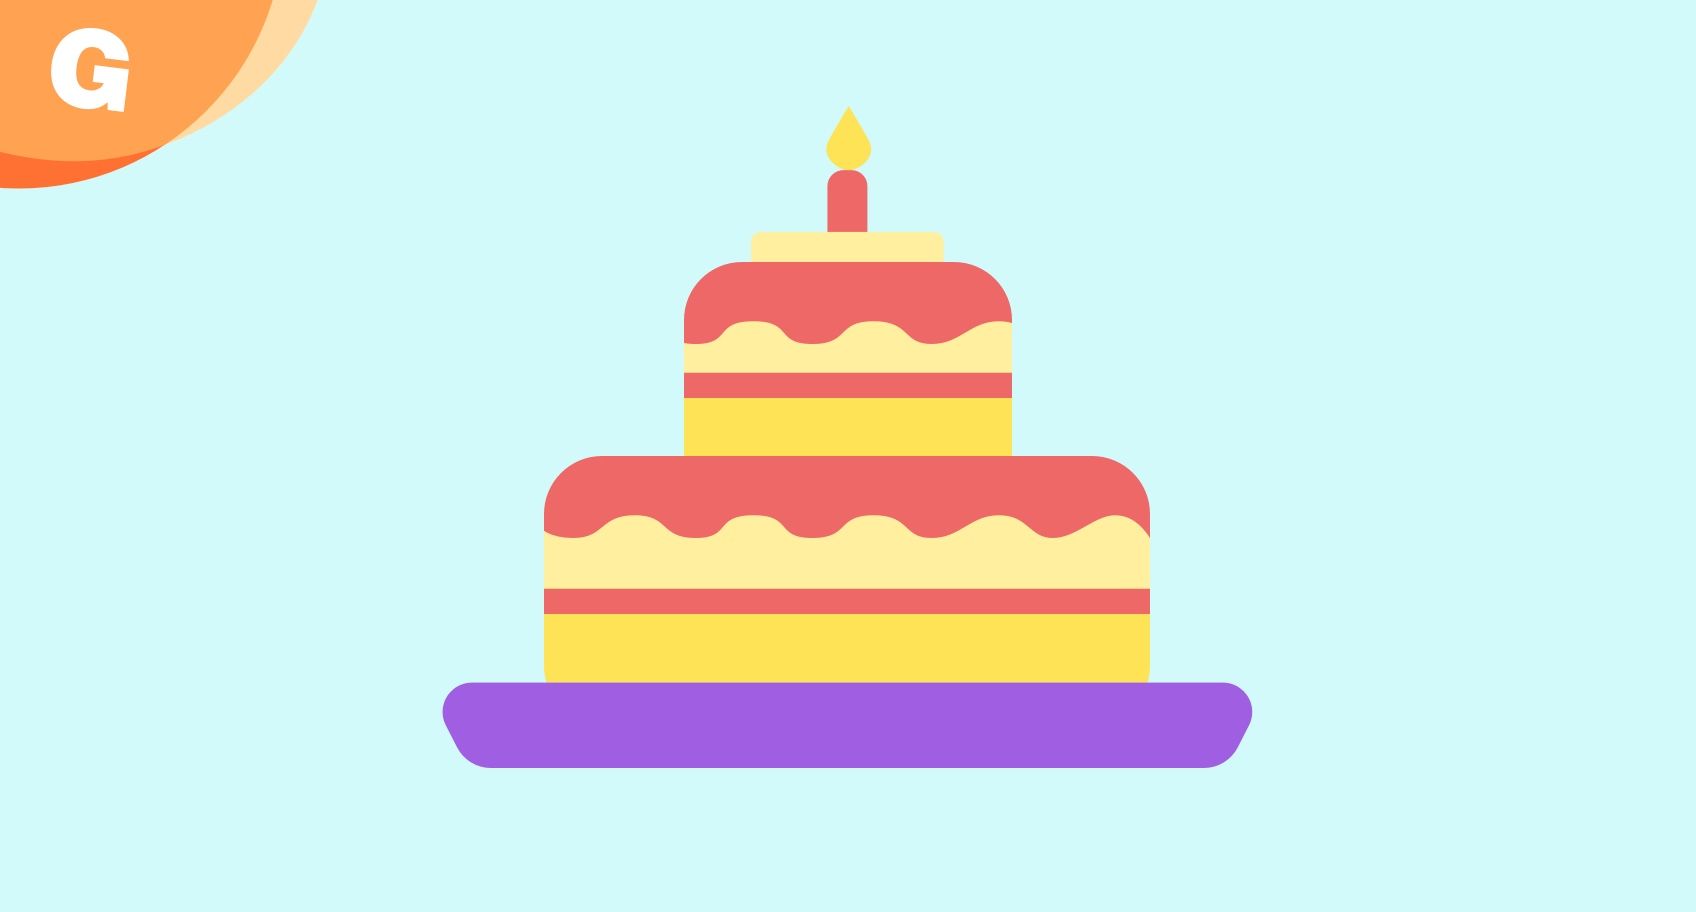 birthday cake 